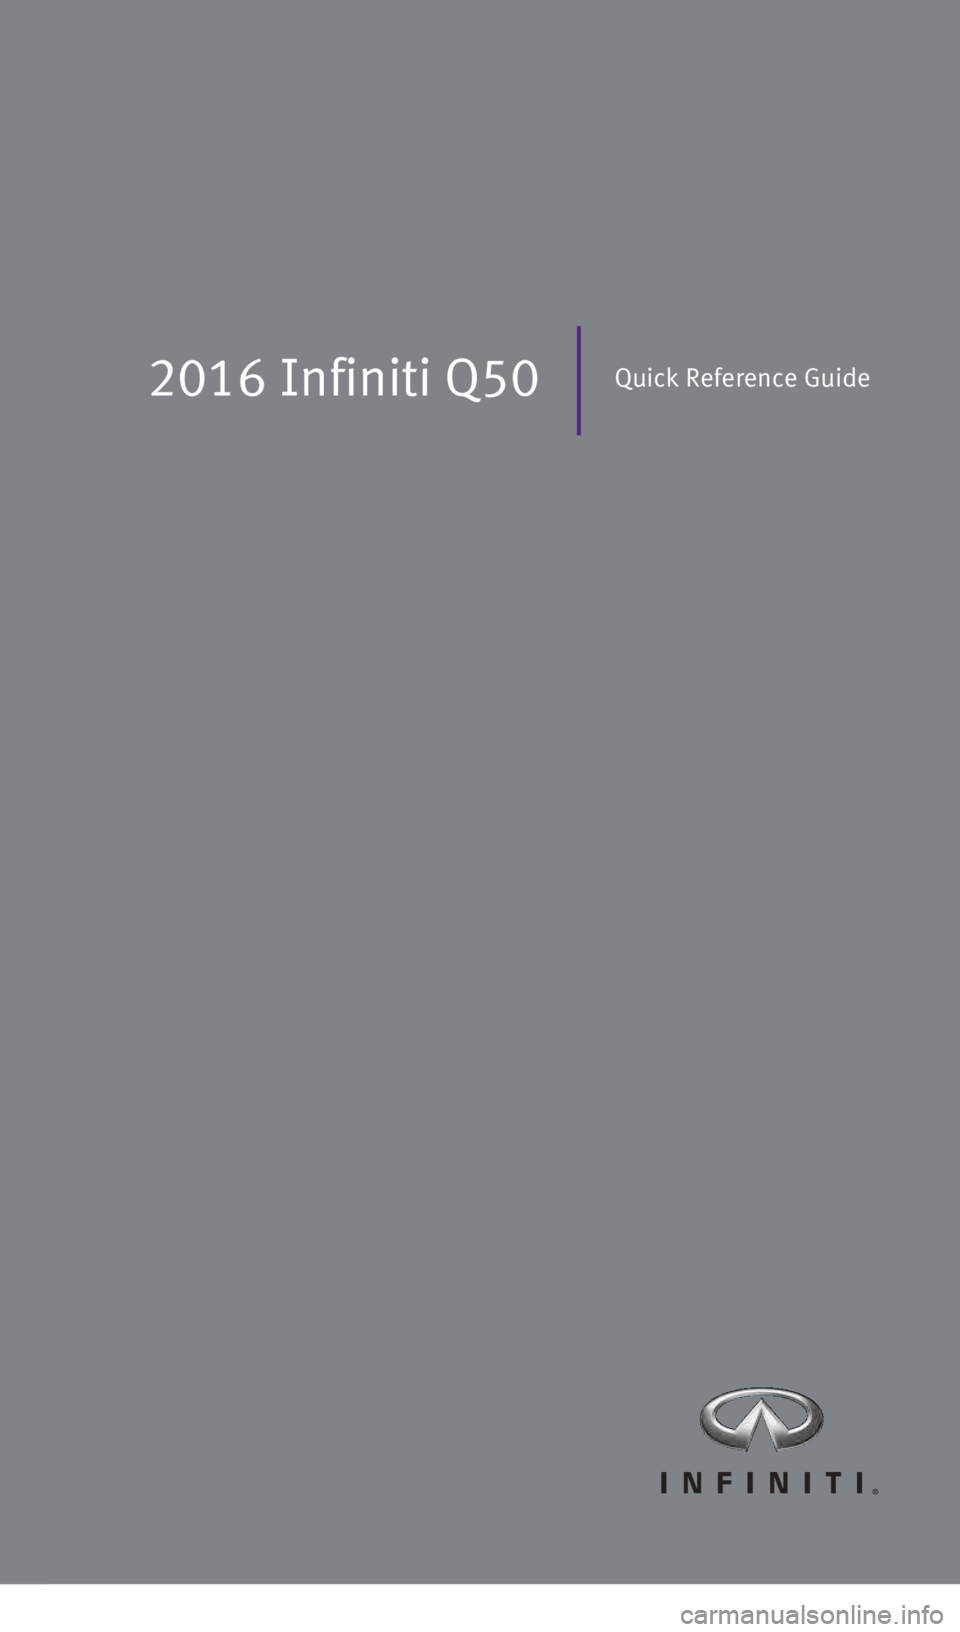 INFINITI Q50 2016  Quick Reference Guide 2016 Infiniti Q50Quick Reference Guide
1967179_16b_Q50_US_QRG_012916.indd   21/29/16   1:50 PM 